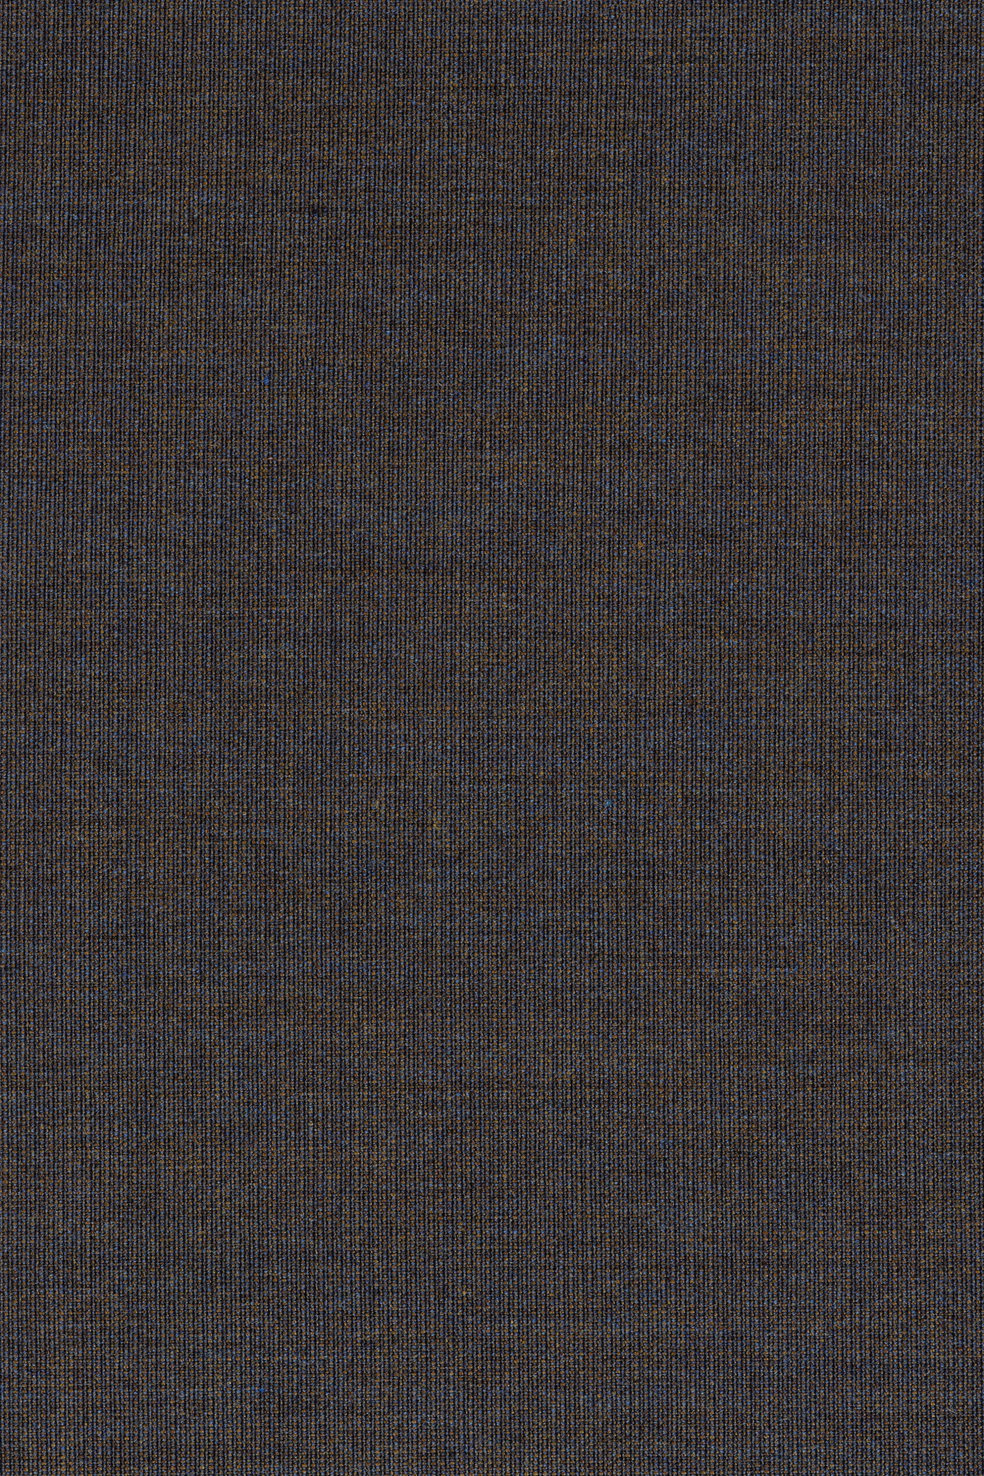 Fabric sample Canvas 2 764 grey